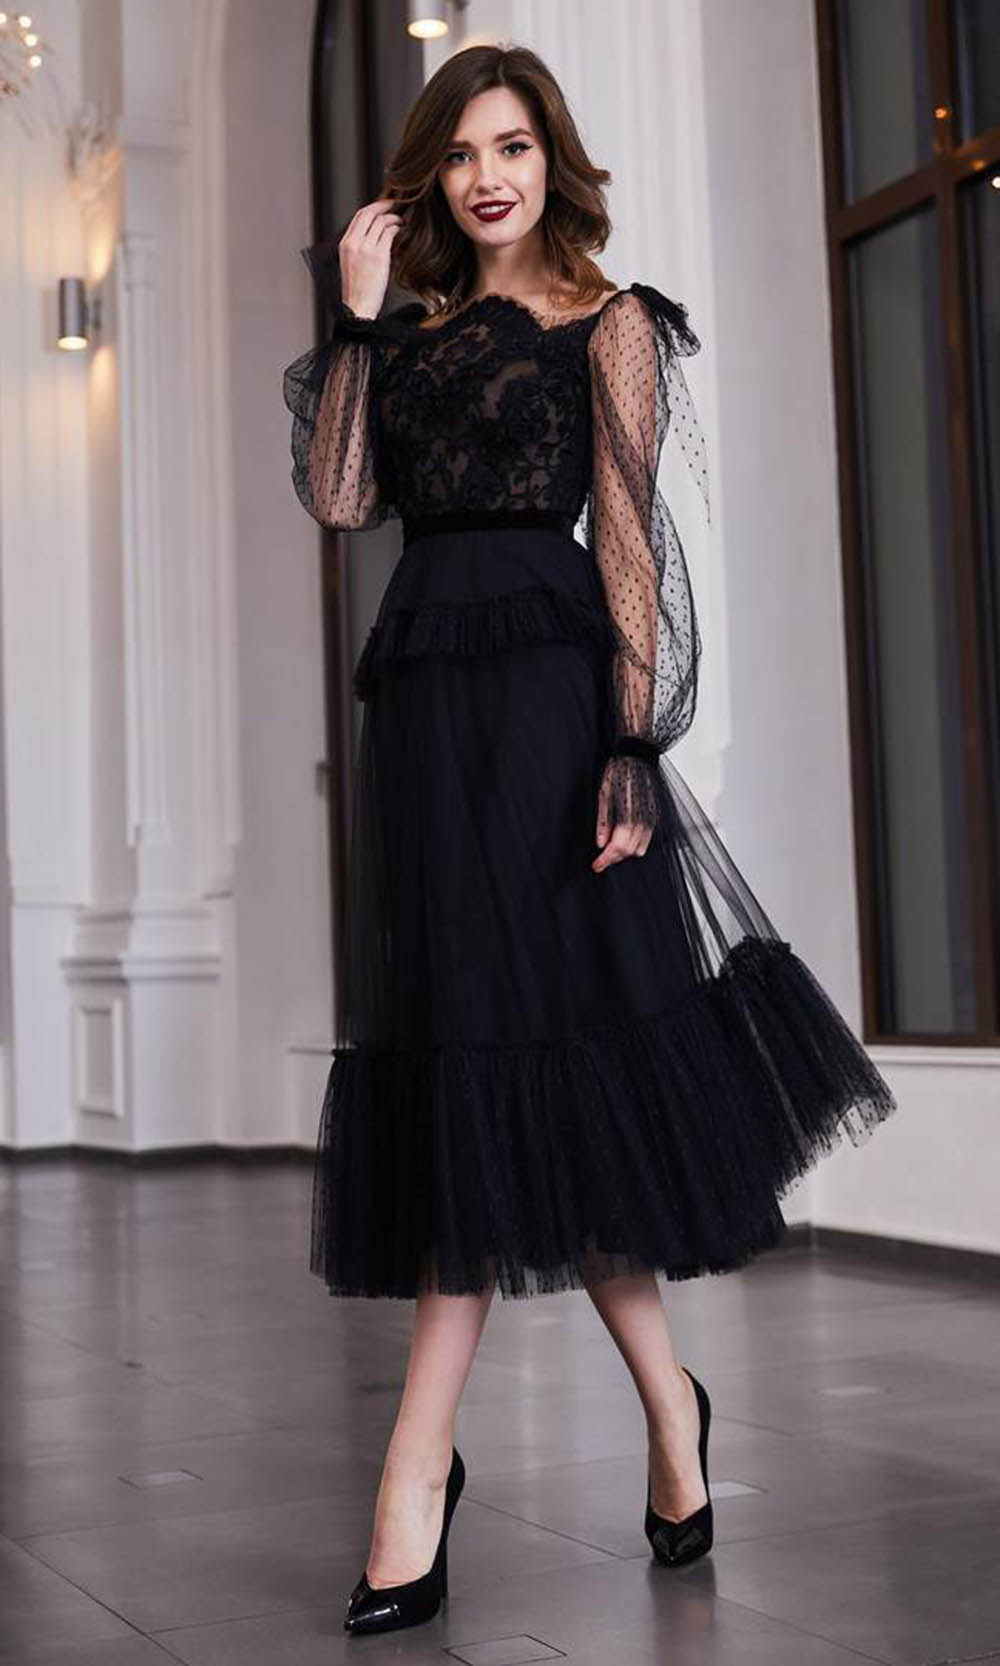 Cristallini - Embroidered Asymmetric A-Line Dress SKA935 - 1 pc Black In Size 2XL Available CCSALE 2XL / Black